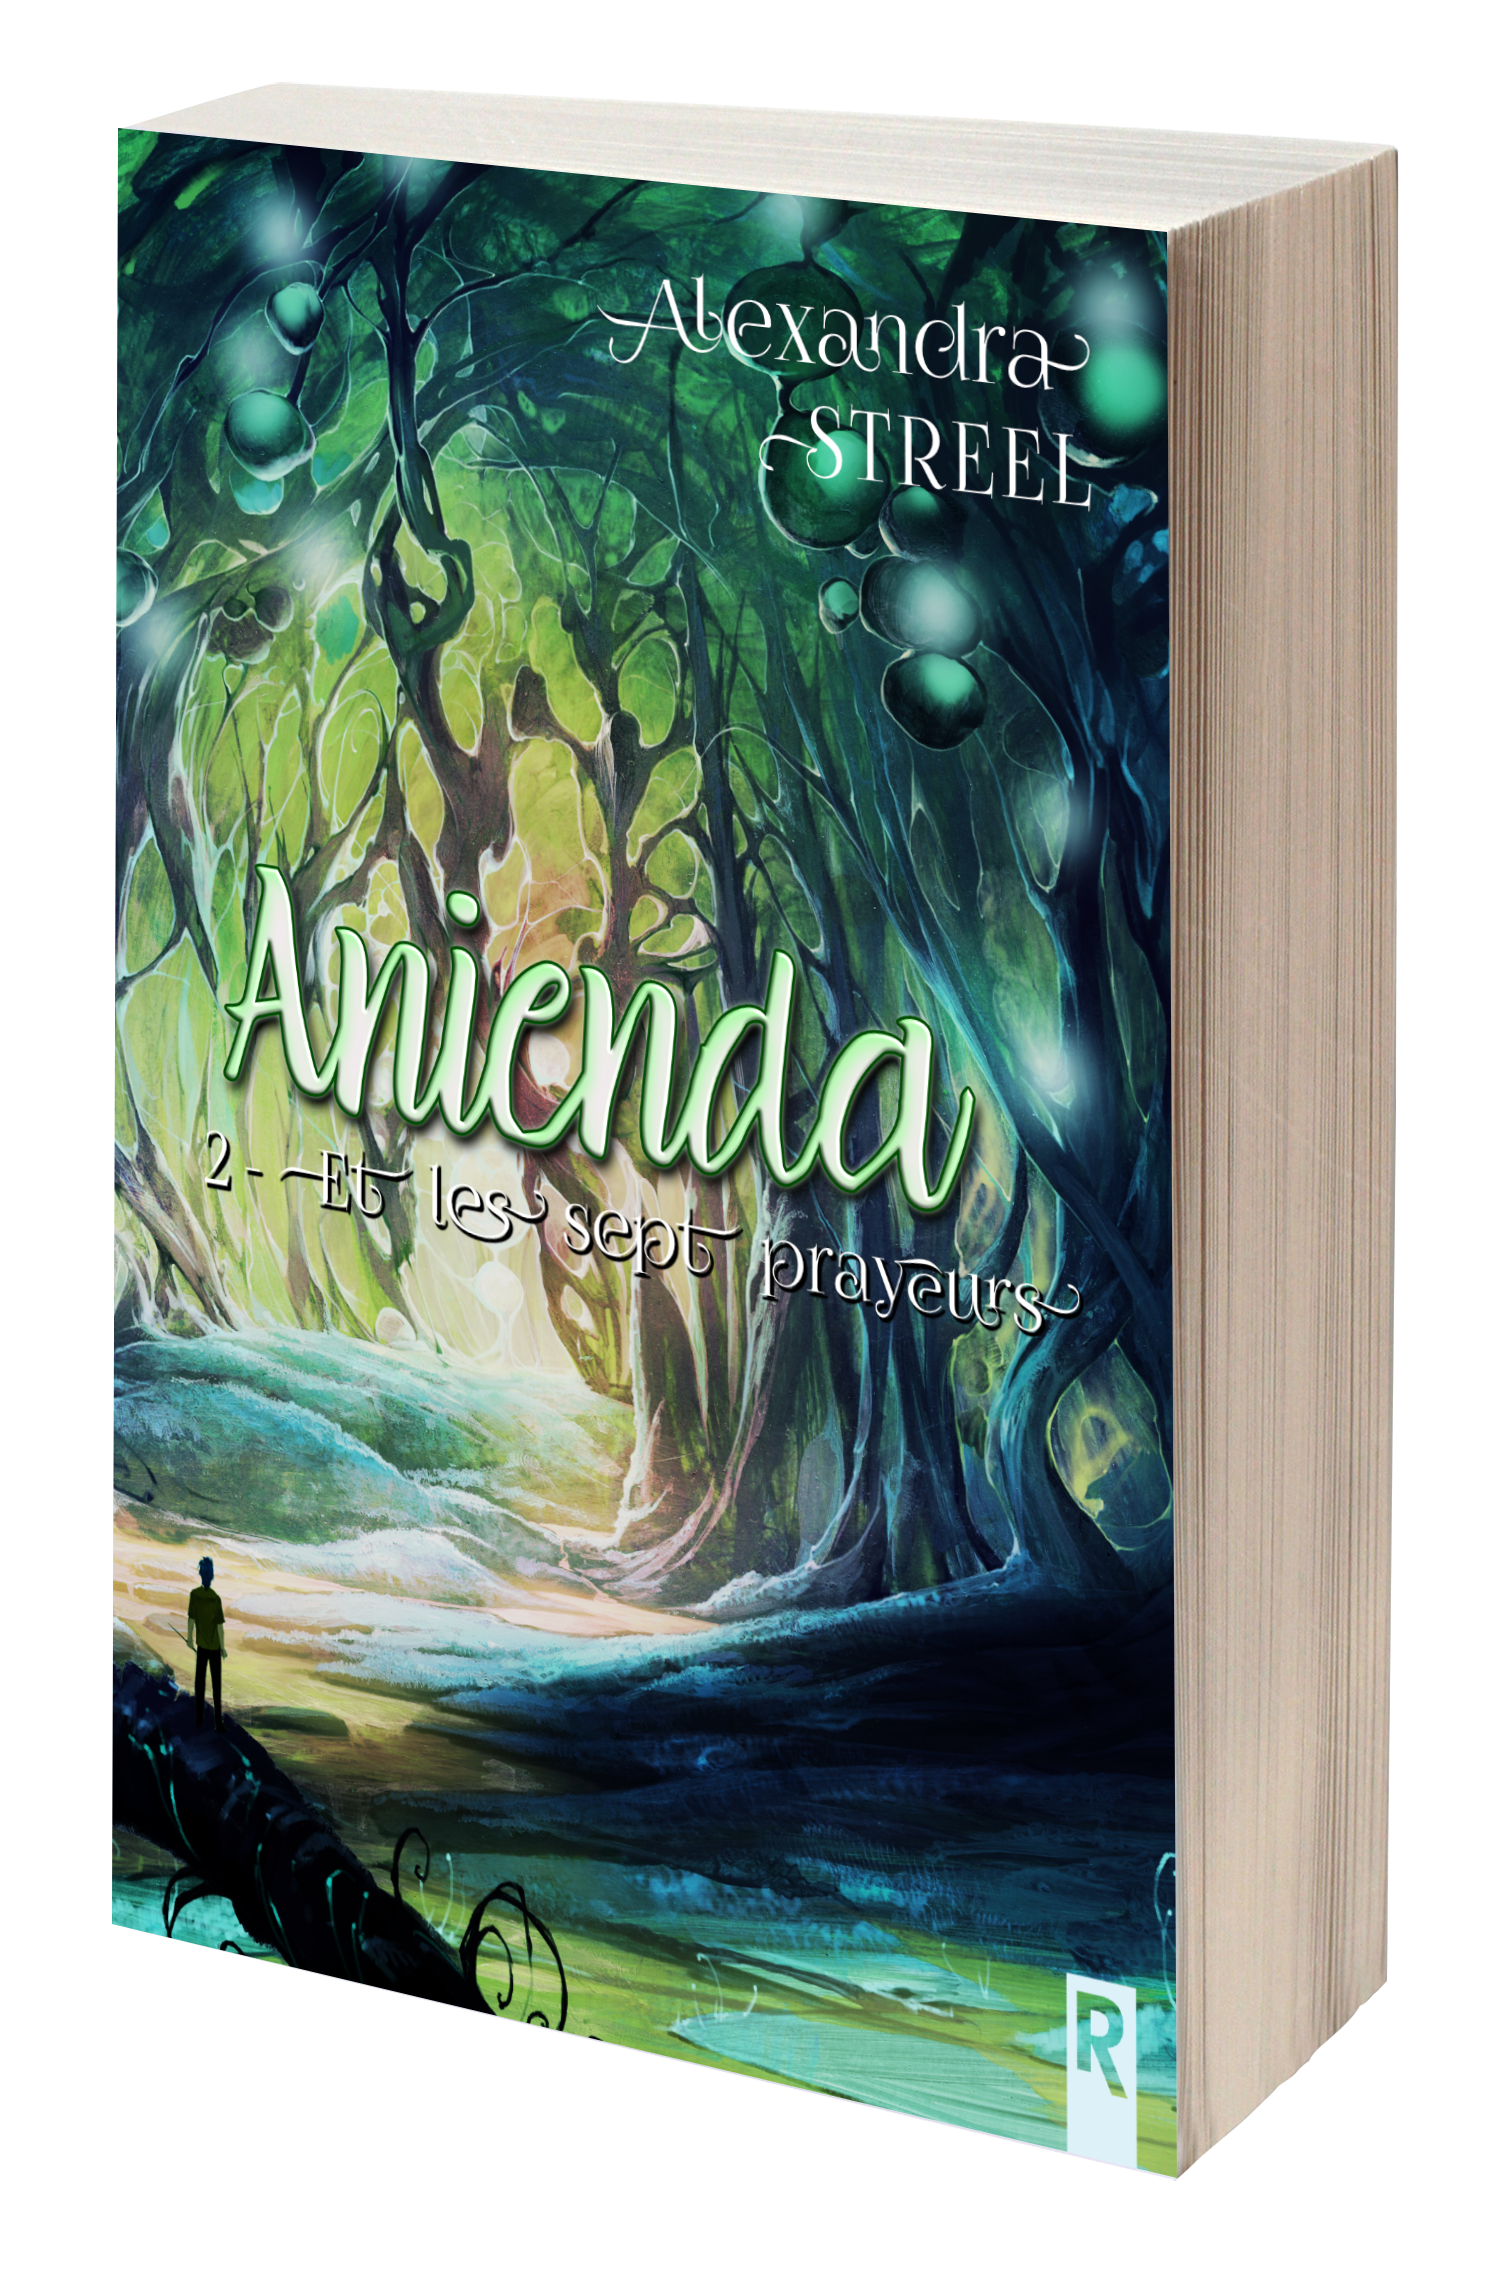 Anienda d'Alexandra Streel, saga fantasy en 4 tomes pour adolescents